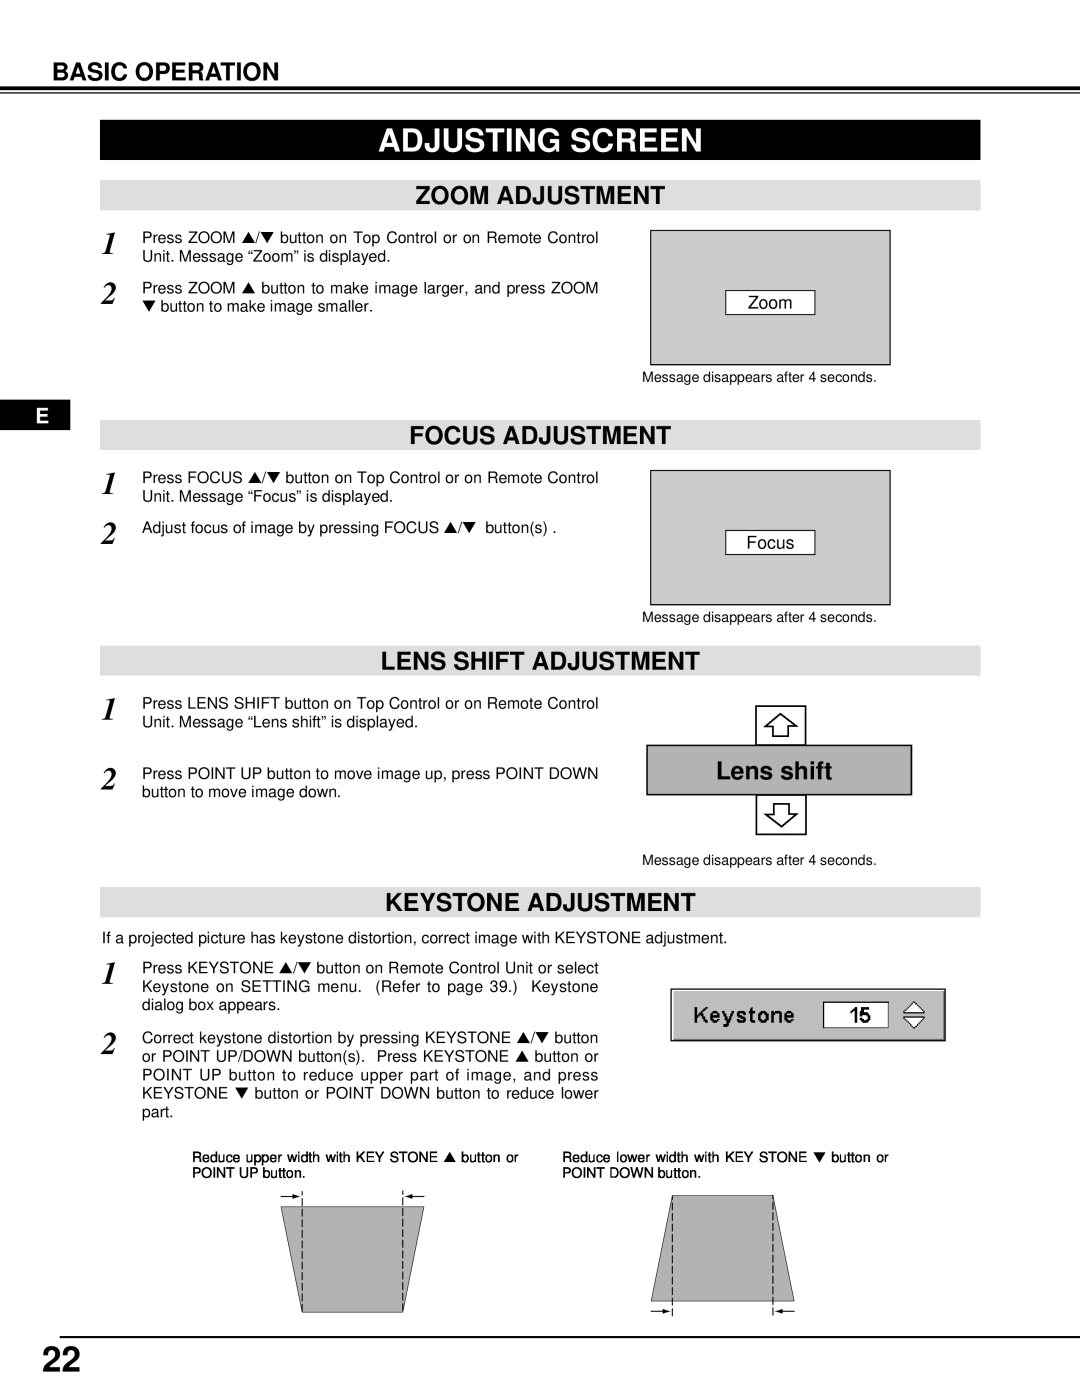 Dukane 28A9058 manual Adjusting Screen, Zoom Adjustment, Focus Adjustment, Lens shift, Keystone Adjustment, Basic Operation 